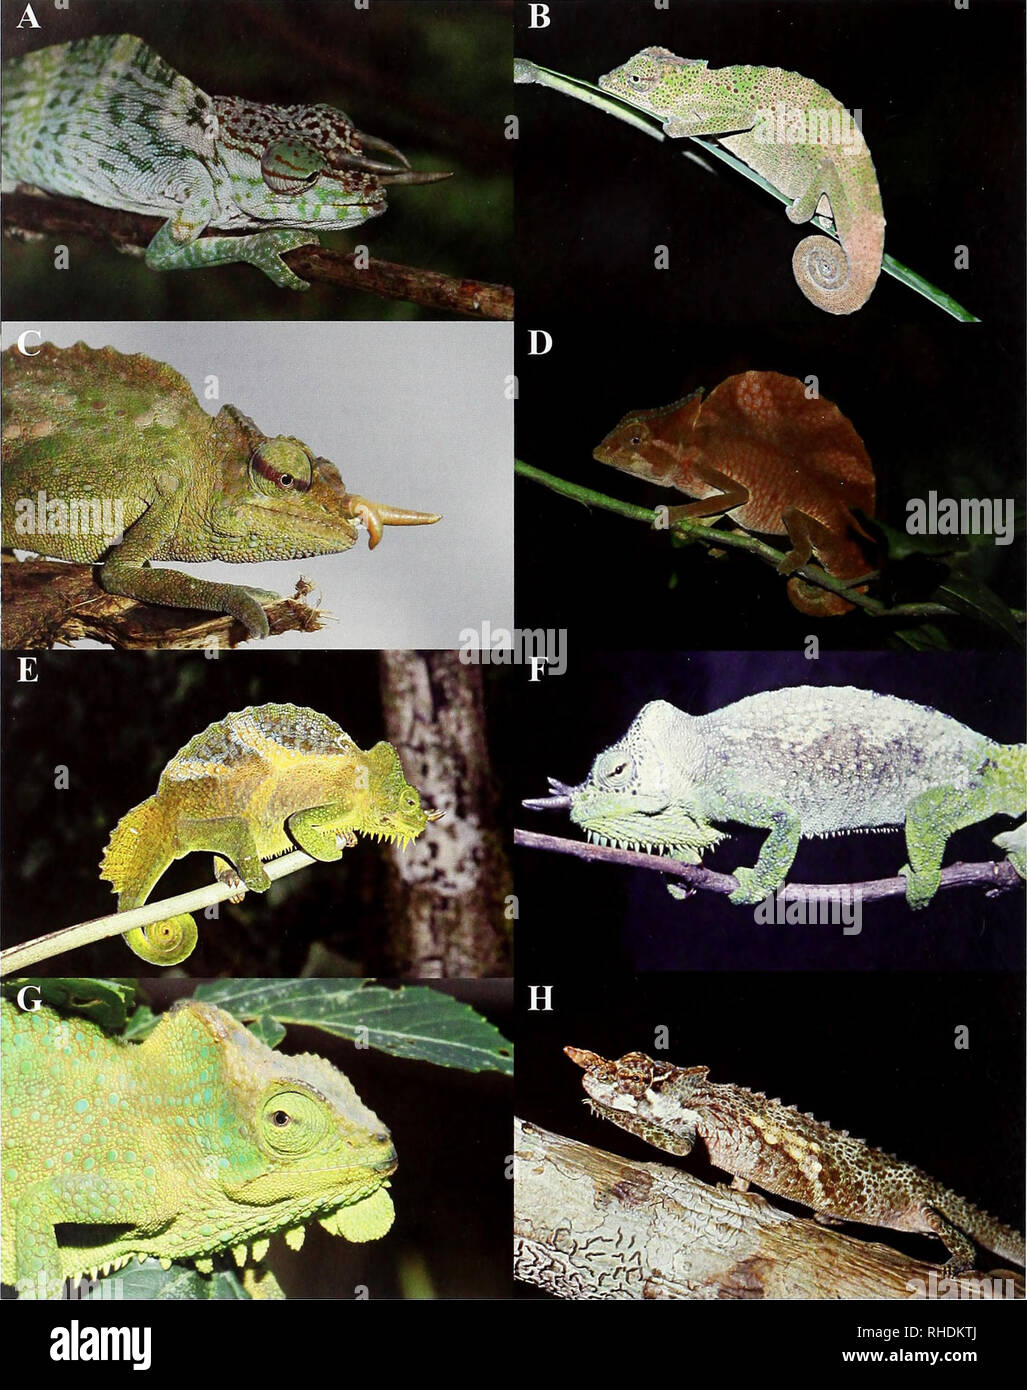 . Bonn zoological bulletin. Zoology. 216 Michael F. Barej et al.. Fig. 2. Cameroonian chameleons (in life): A = Trioceros oweni male (Campo region; photo by J.A.M. Wurstner). B = T. camer- unensis (Njonji, Mt. Cameroon). C = T. montium male; specimen with an aberrant horn shown (Big Massaka, Rumpi Hills). D = T. cristatus male (Nkoelon, Campo region). E = T. q. quadricornis male (Mt. Kupe). F = T. q. gracilior male (Mt. Lefo; photo by W. Bohme). G = T. q. eisentrauti female (Mt. Rata, Rumpi Hills). H = T. pfefferi male (Kodmin, Bakossi Mts.). Bonn zoological Bulletin 57 (2): 211-229 ©ZFMK. Ple Stock Photo